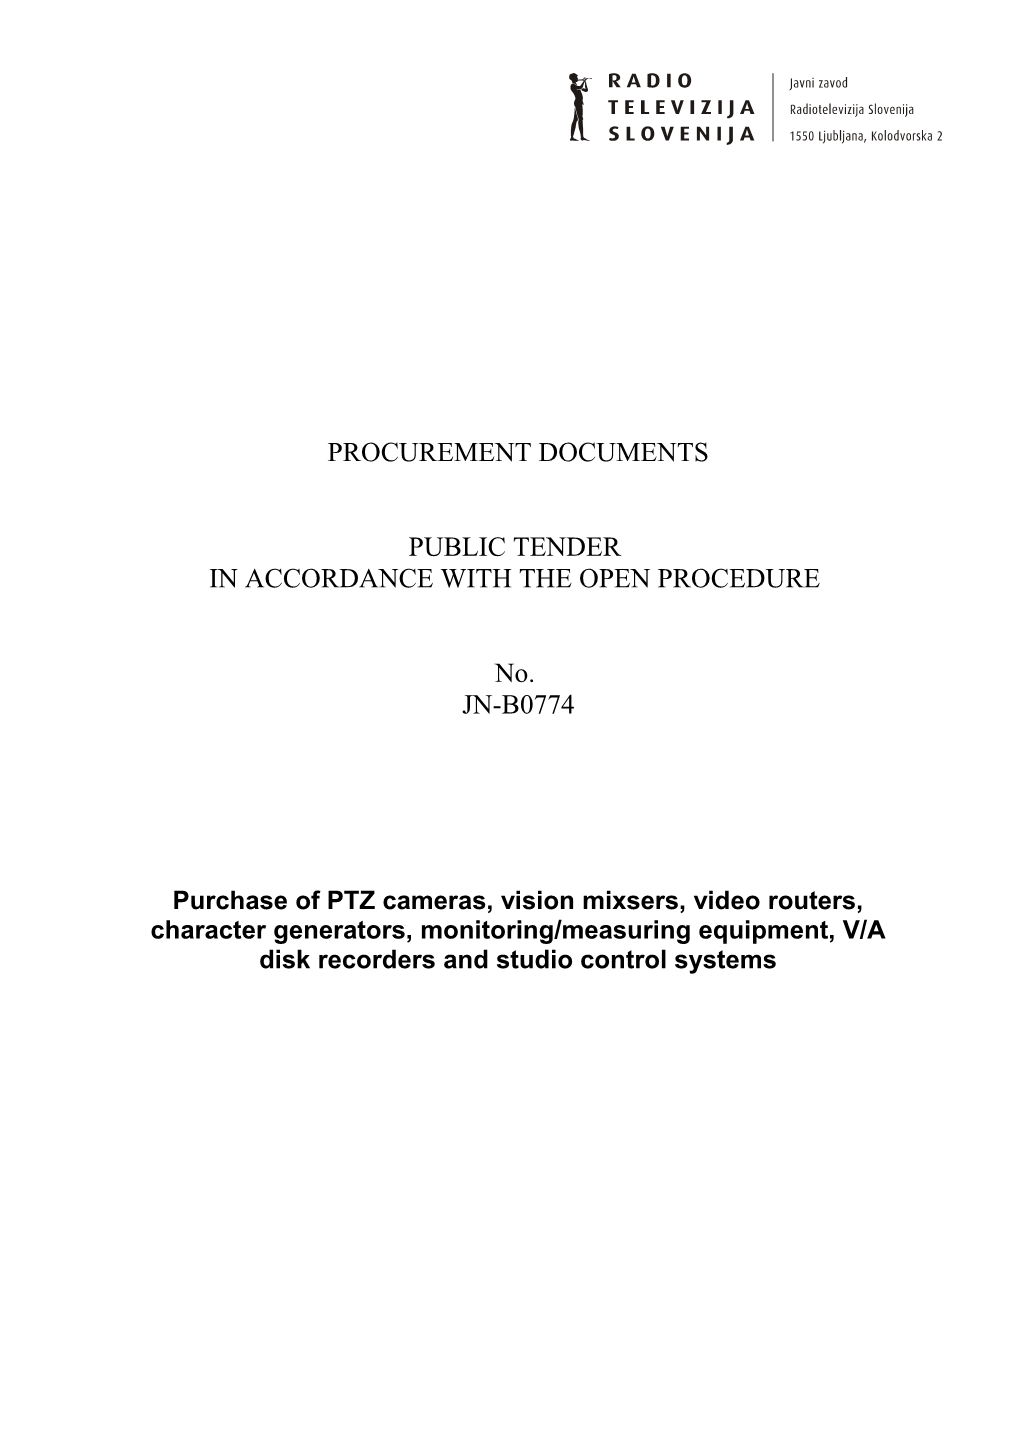 Procurement Documents JN-B0774